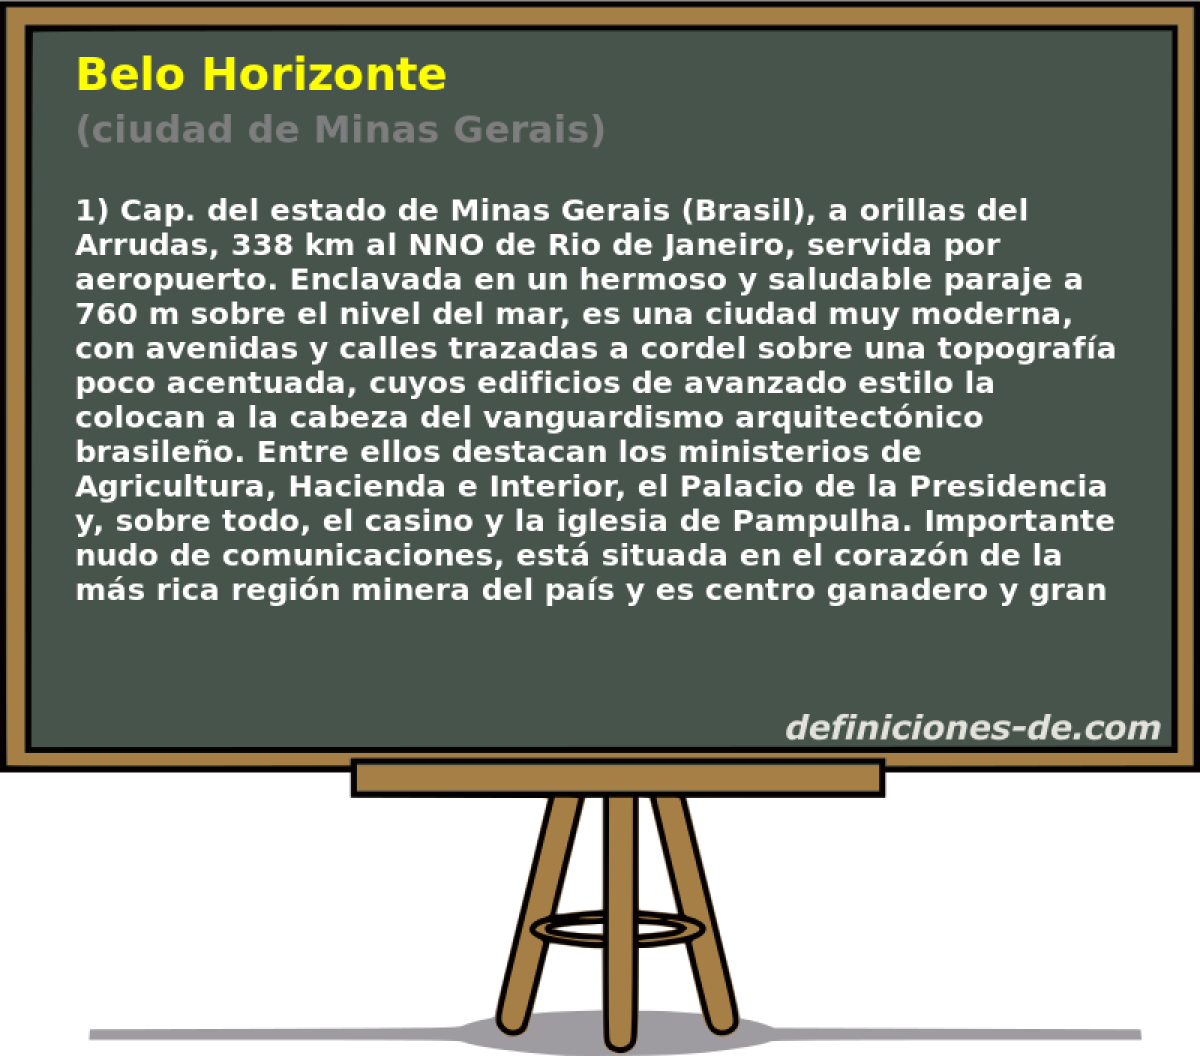 Belo Horizonte (ciudad de Minas Gerais)